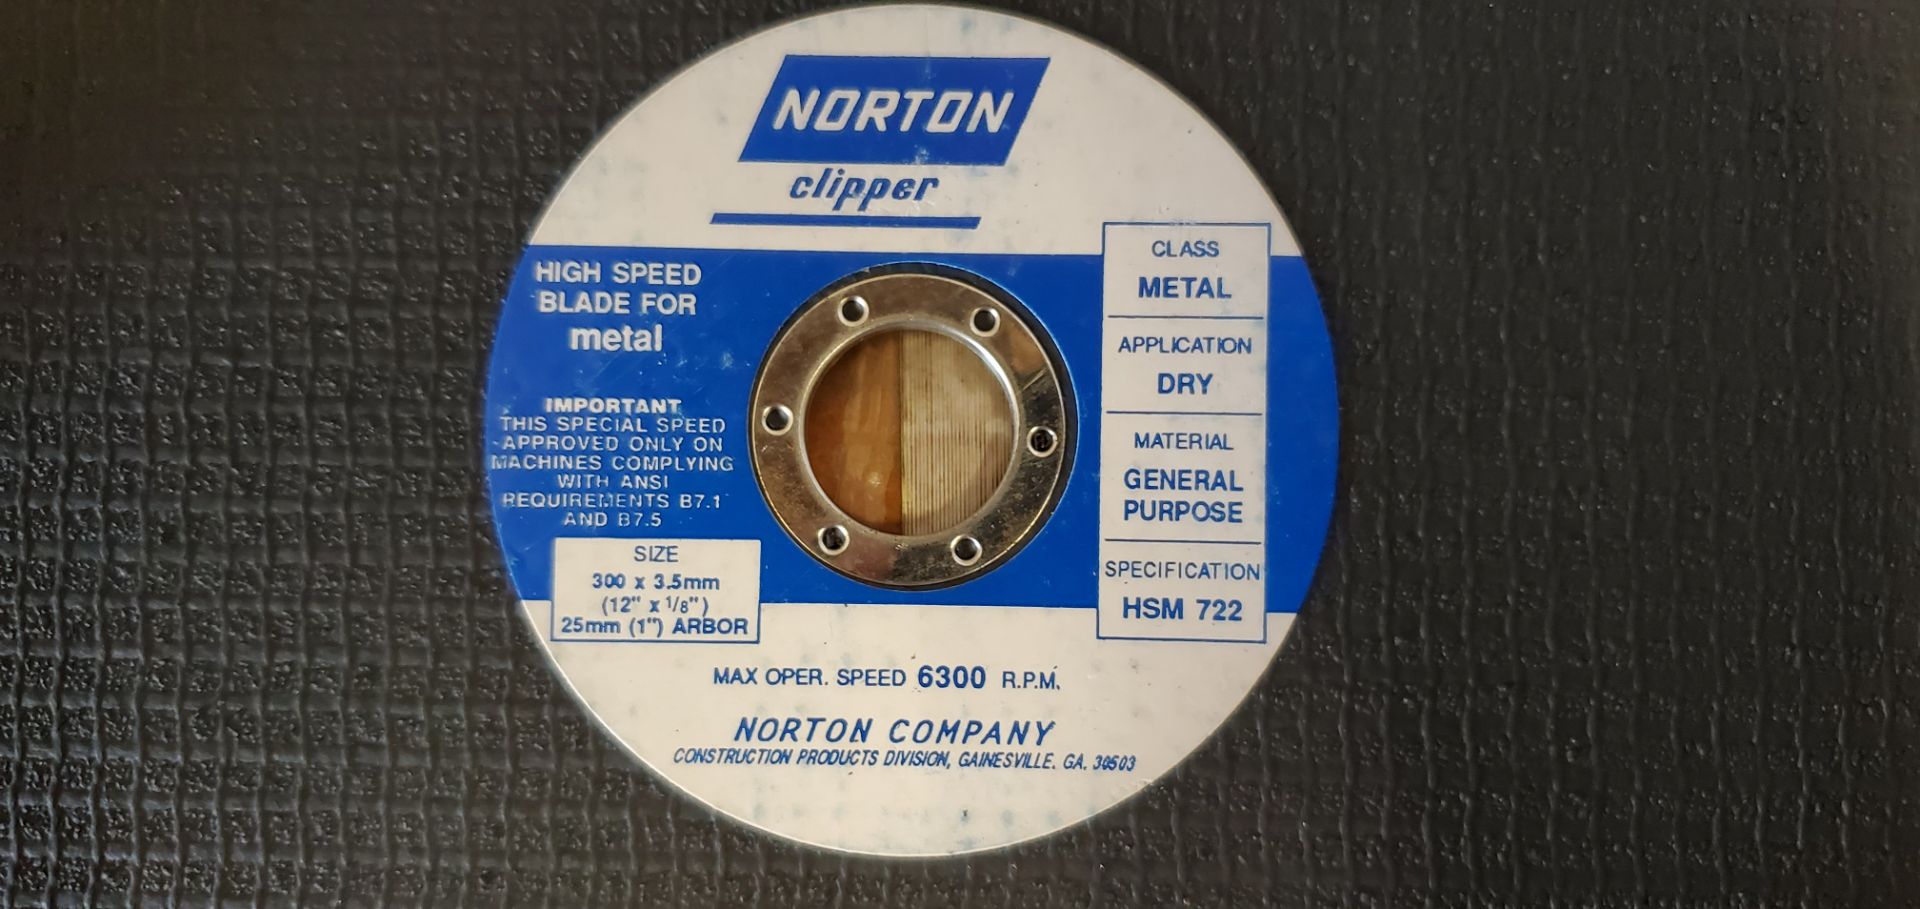 Norton 12" Metal Cutting Blades, 1" Arbor - Image 2 of 2